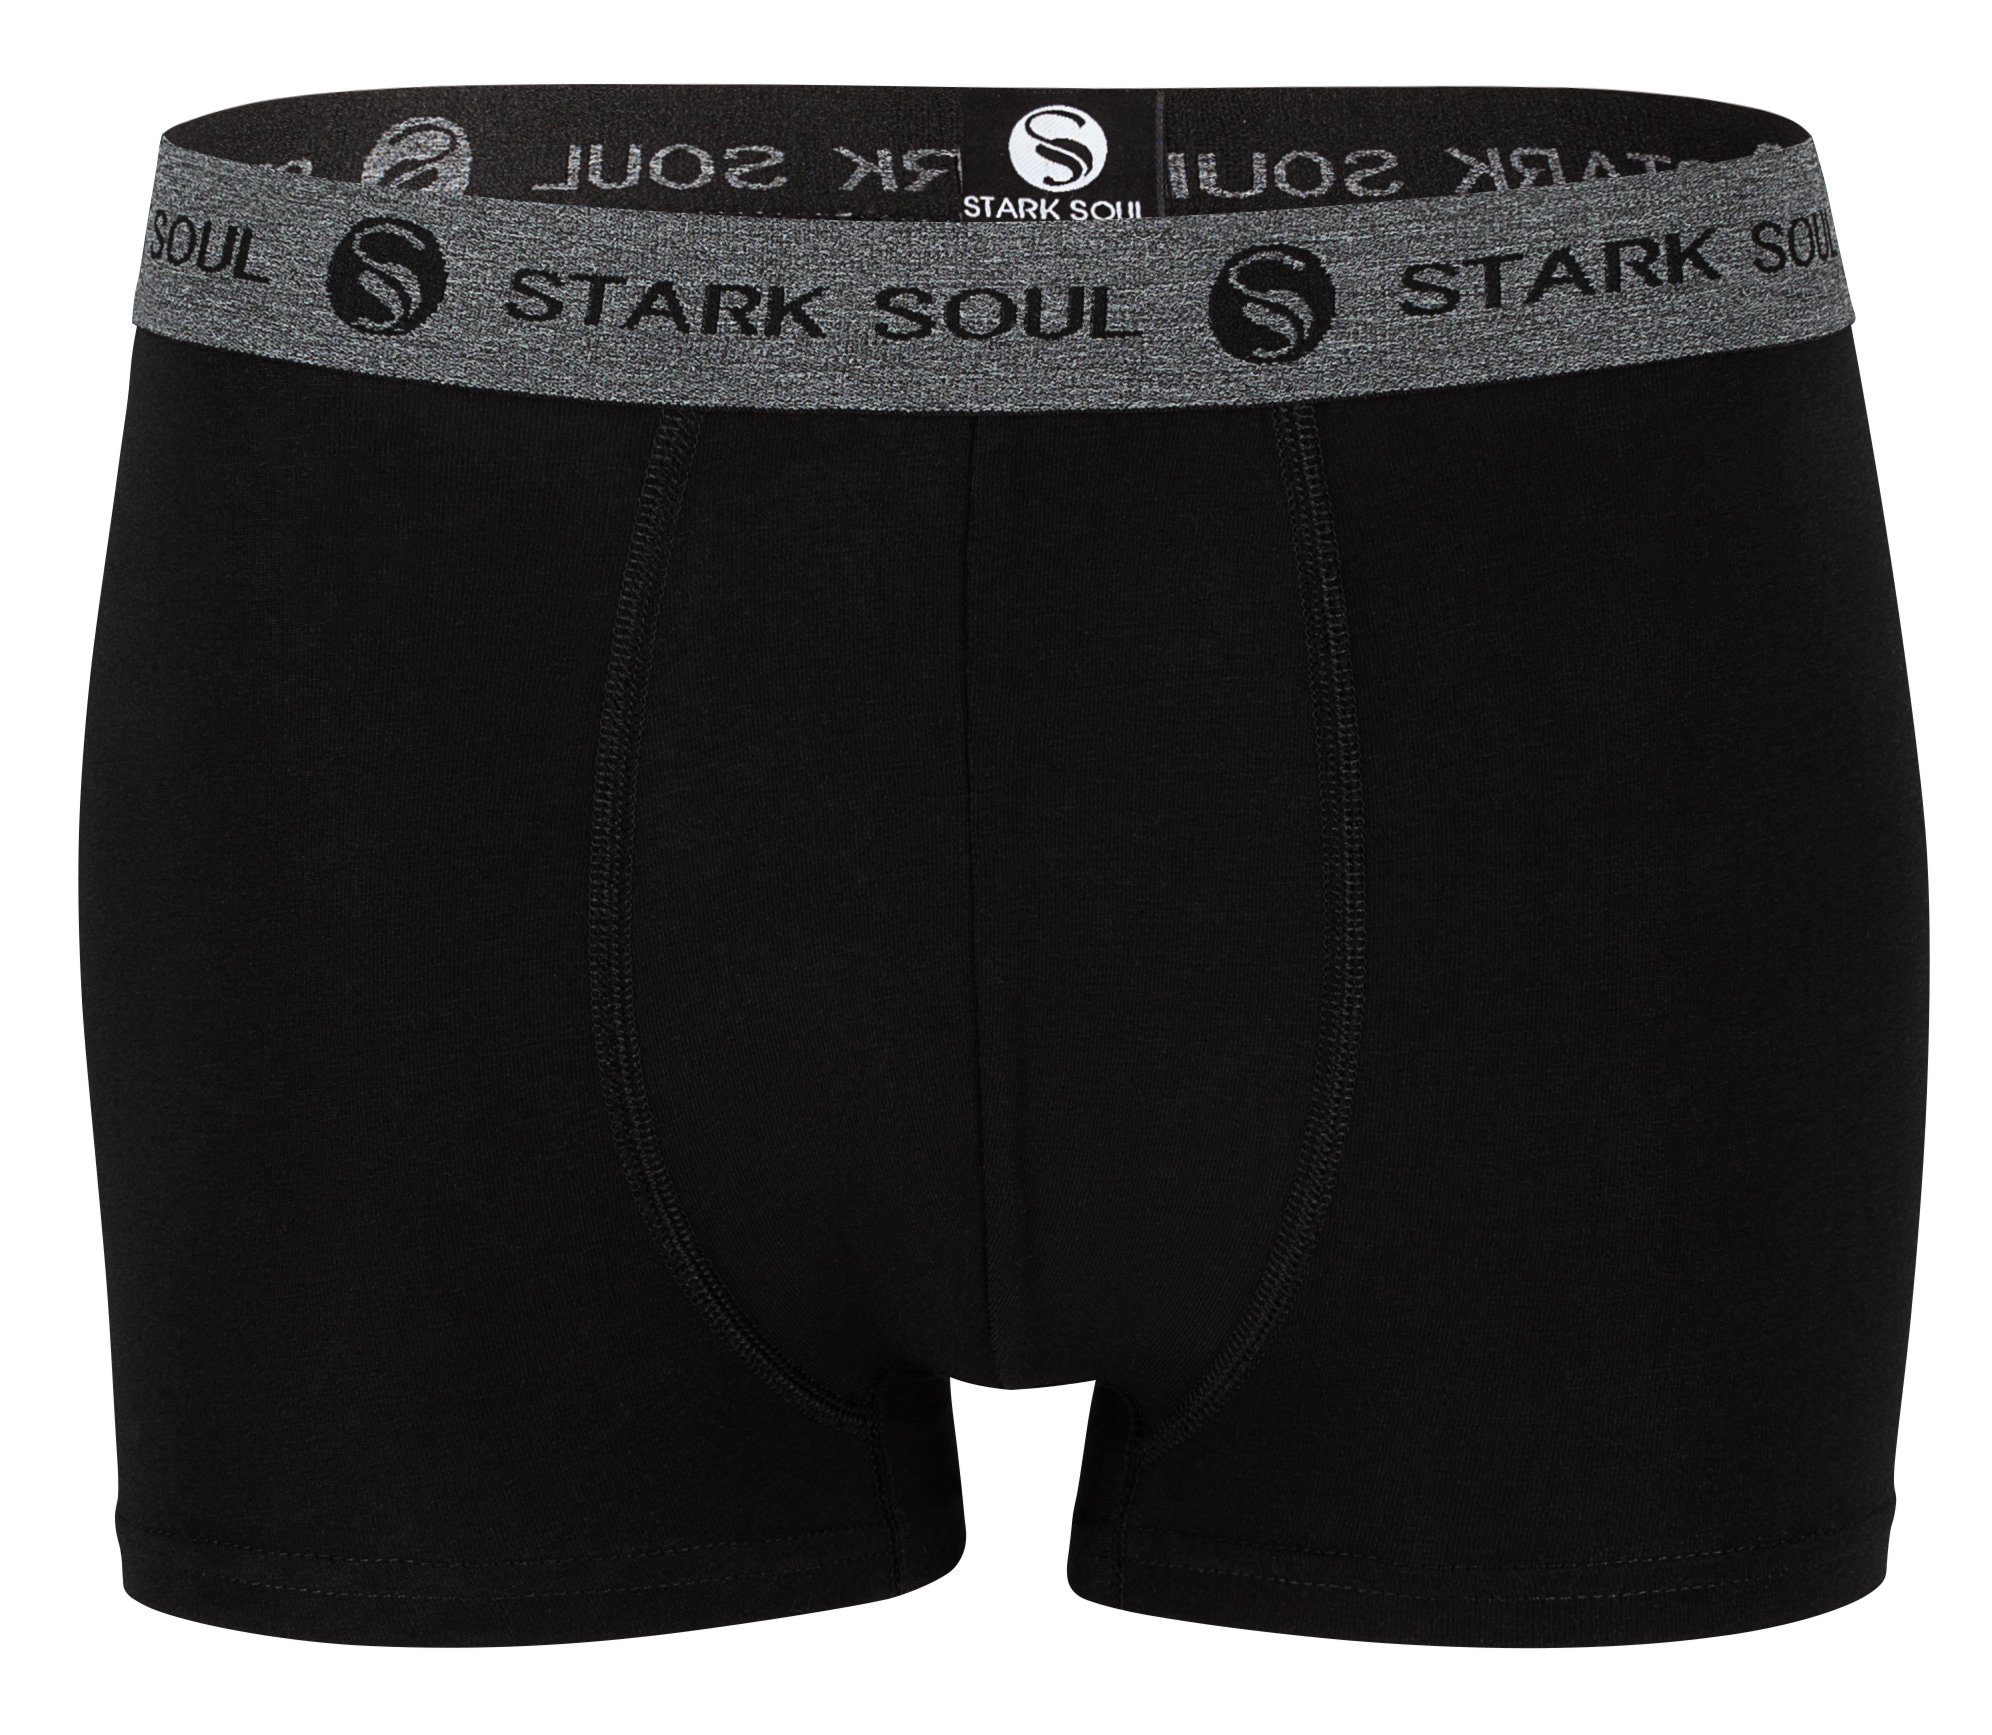 Gemischt 6er-Pack Baumwoll-Unterhosen im Boxershorts, Soul® Stark Pack, Hipster Herren Boxershorts 6er